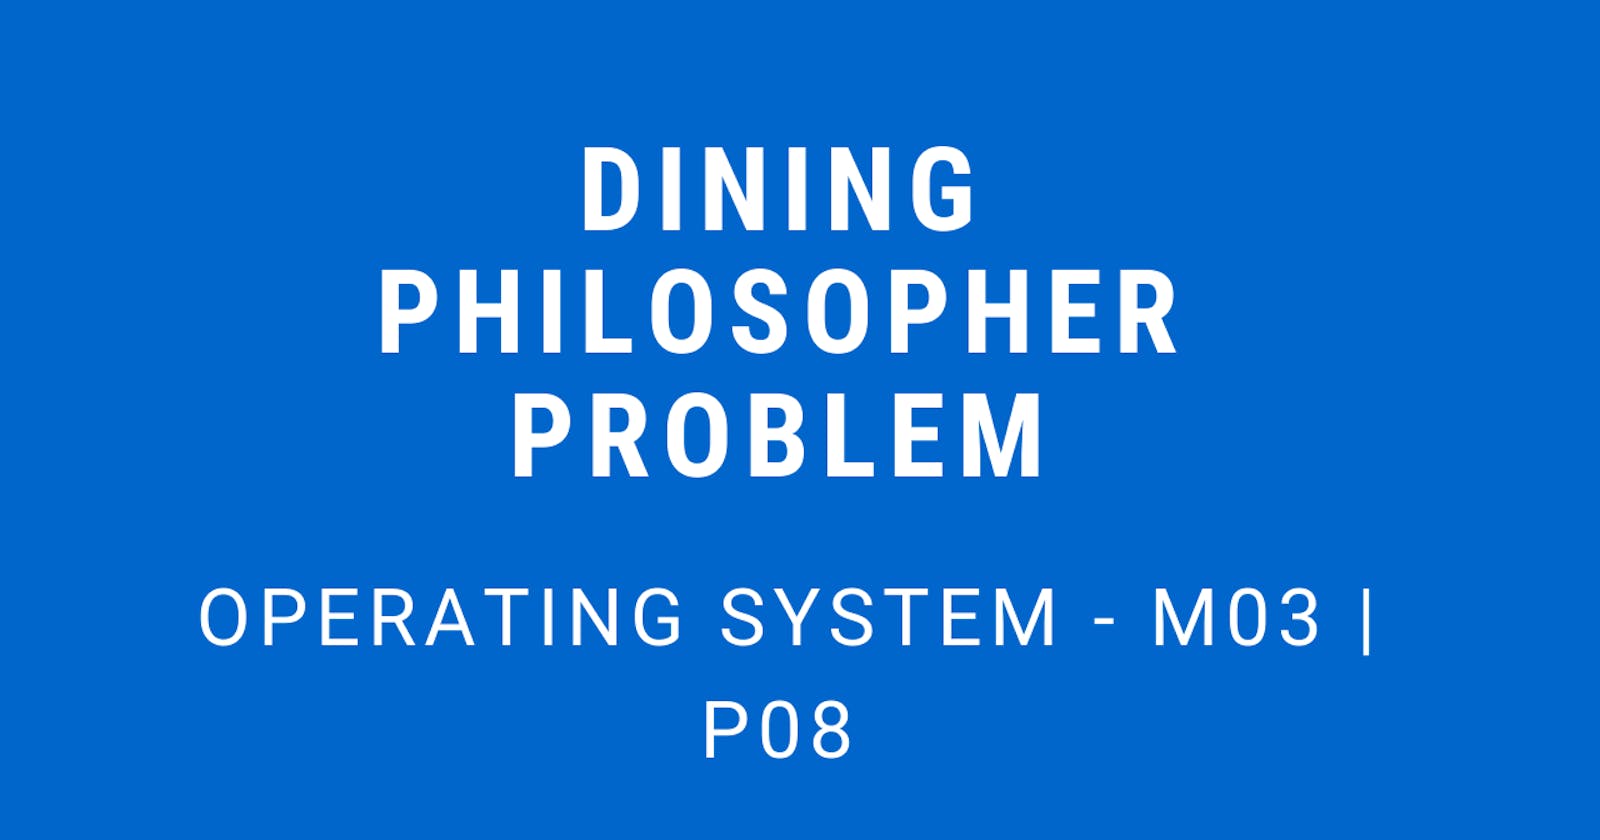 Dining Philosopher Problem | Operating System - M03 P08